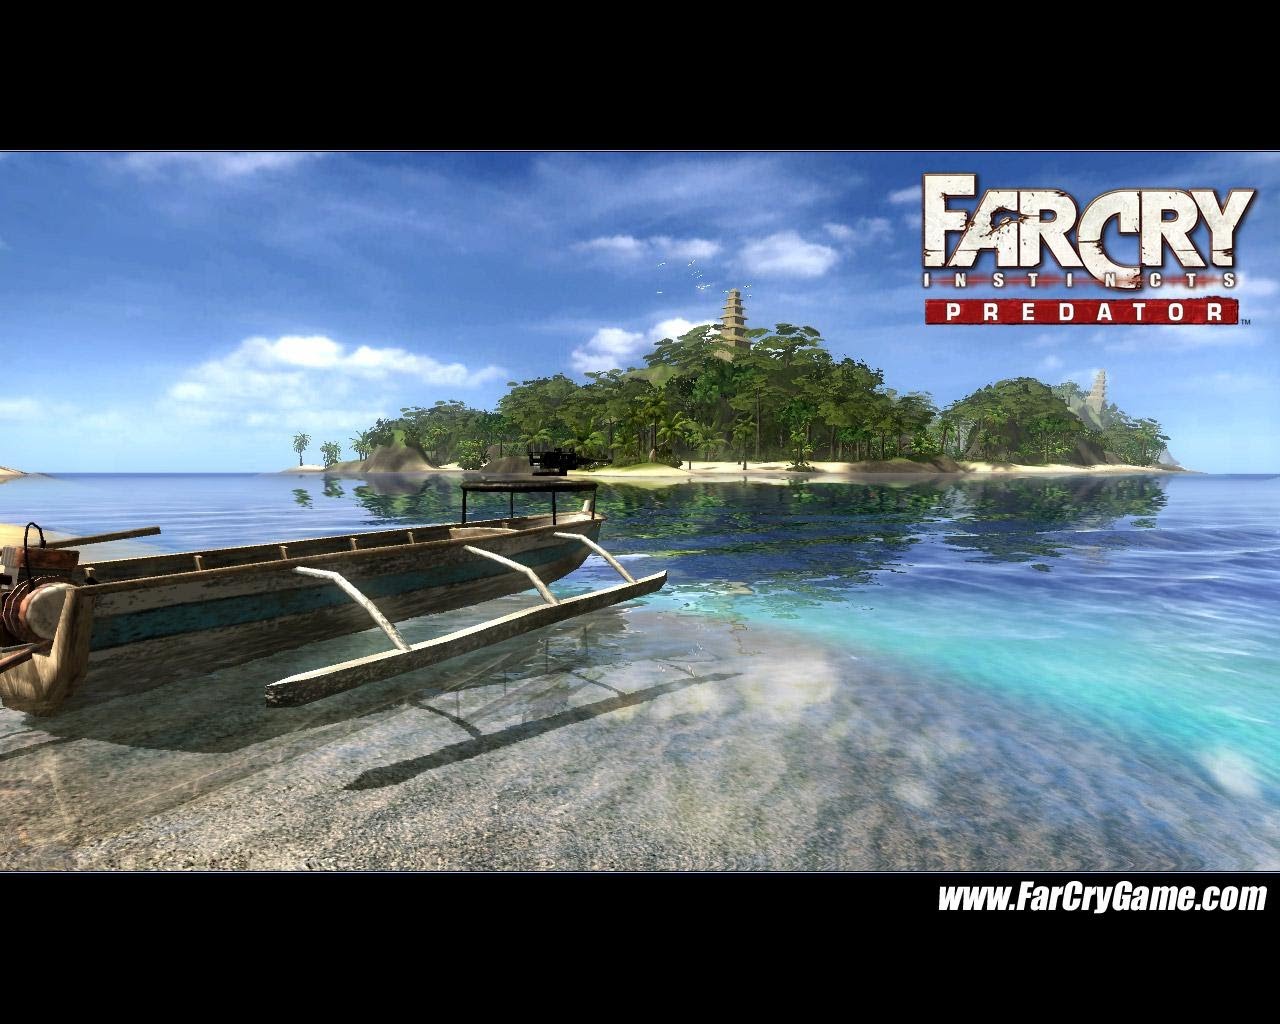 Far Cry Instincts #21